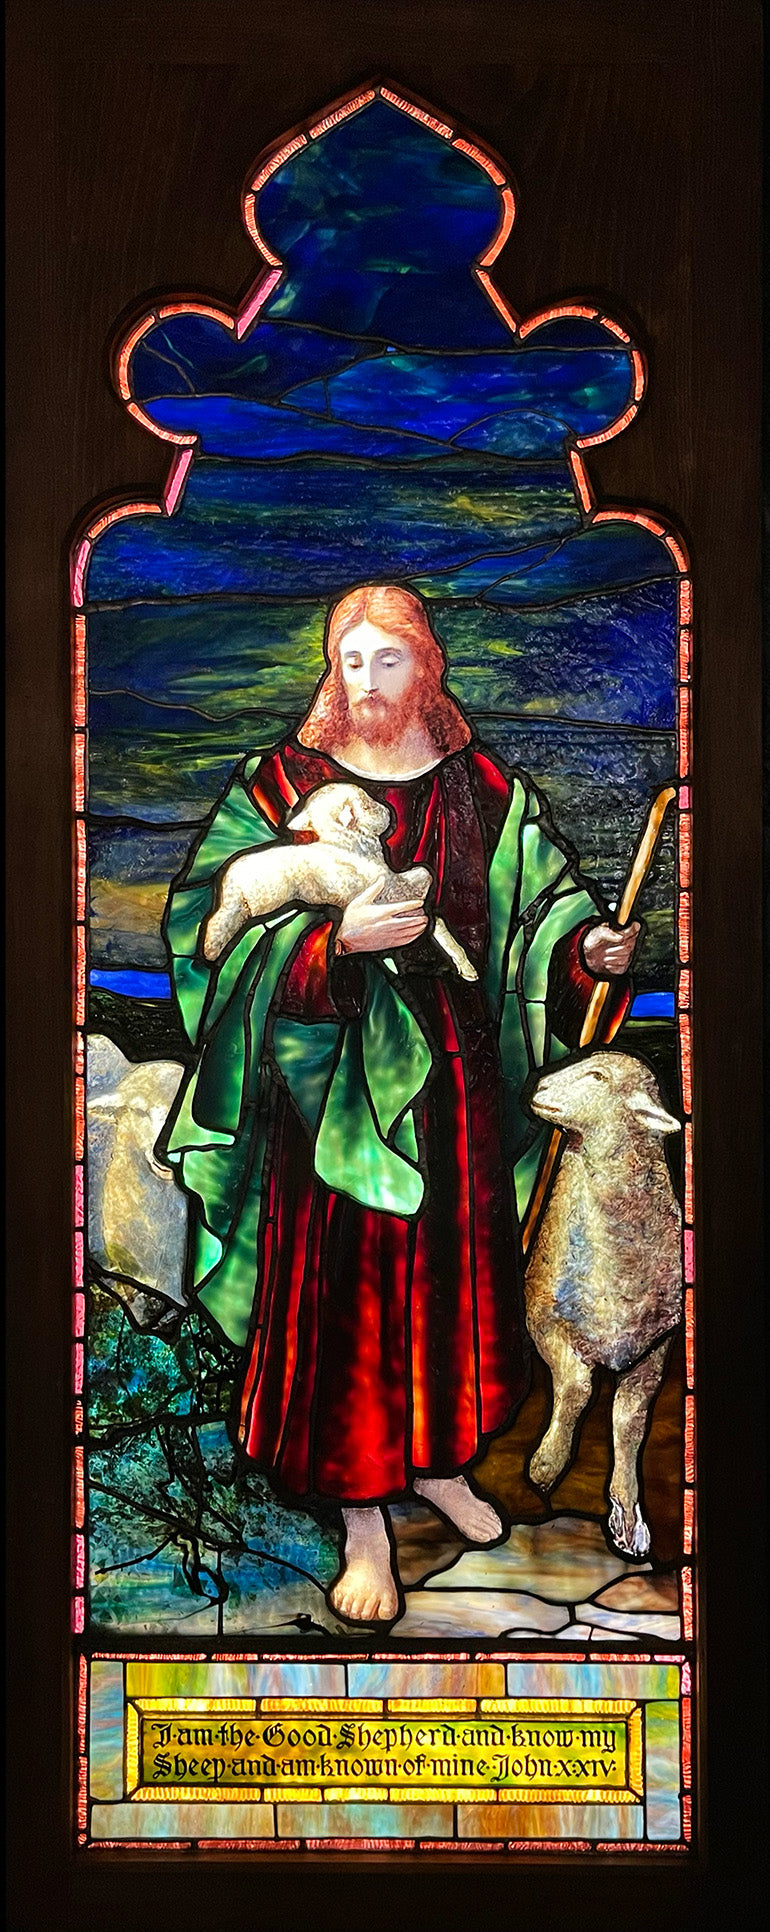 The Good Shepherd Tiffany Stained-Glass Window